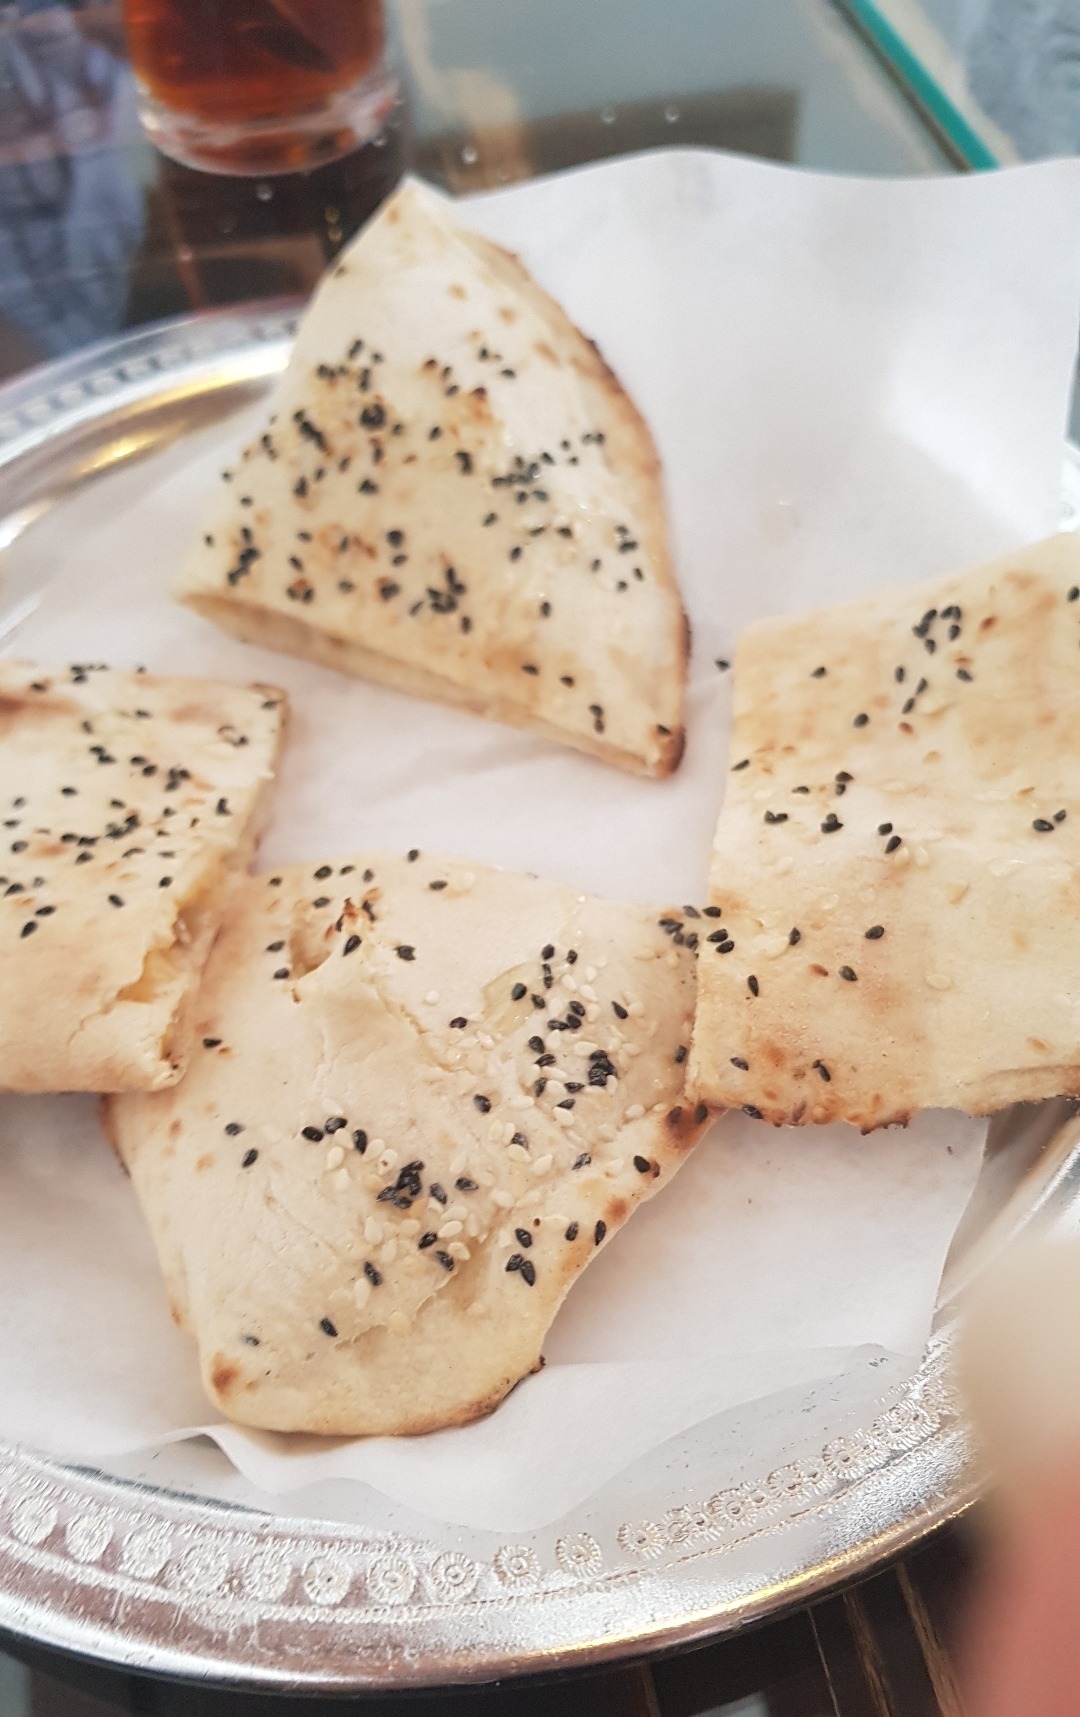 Cheese amd honey bread 👌 @ فودز آت هوم - البحرين